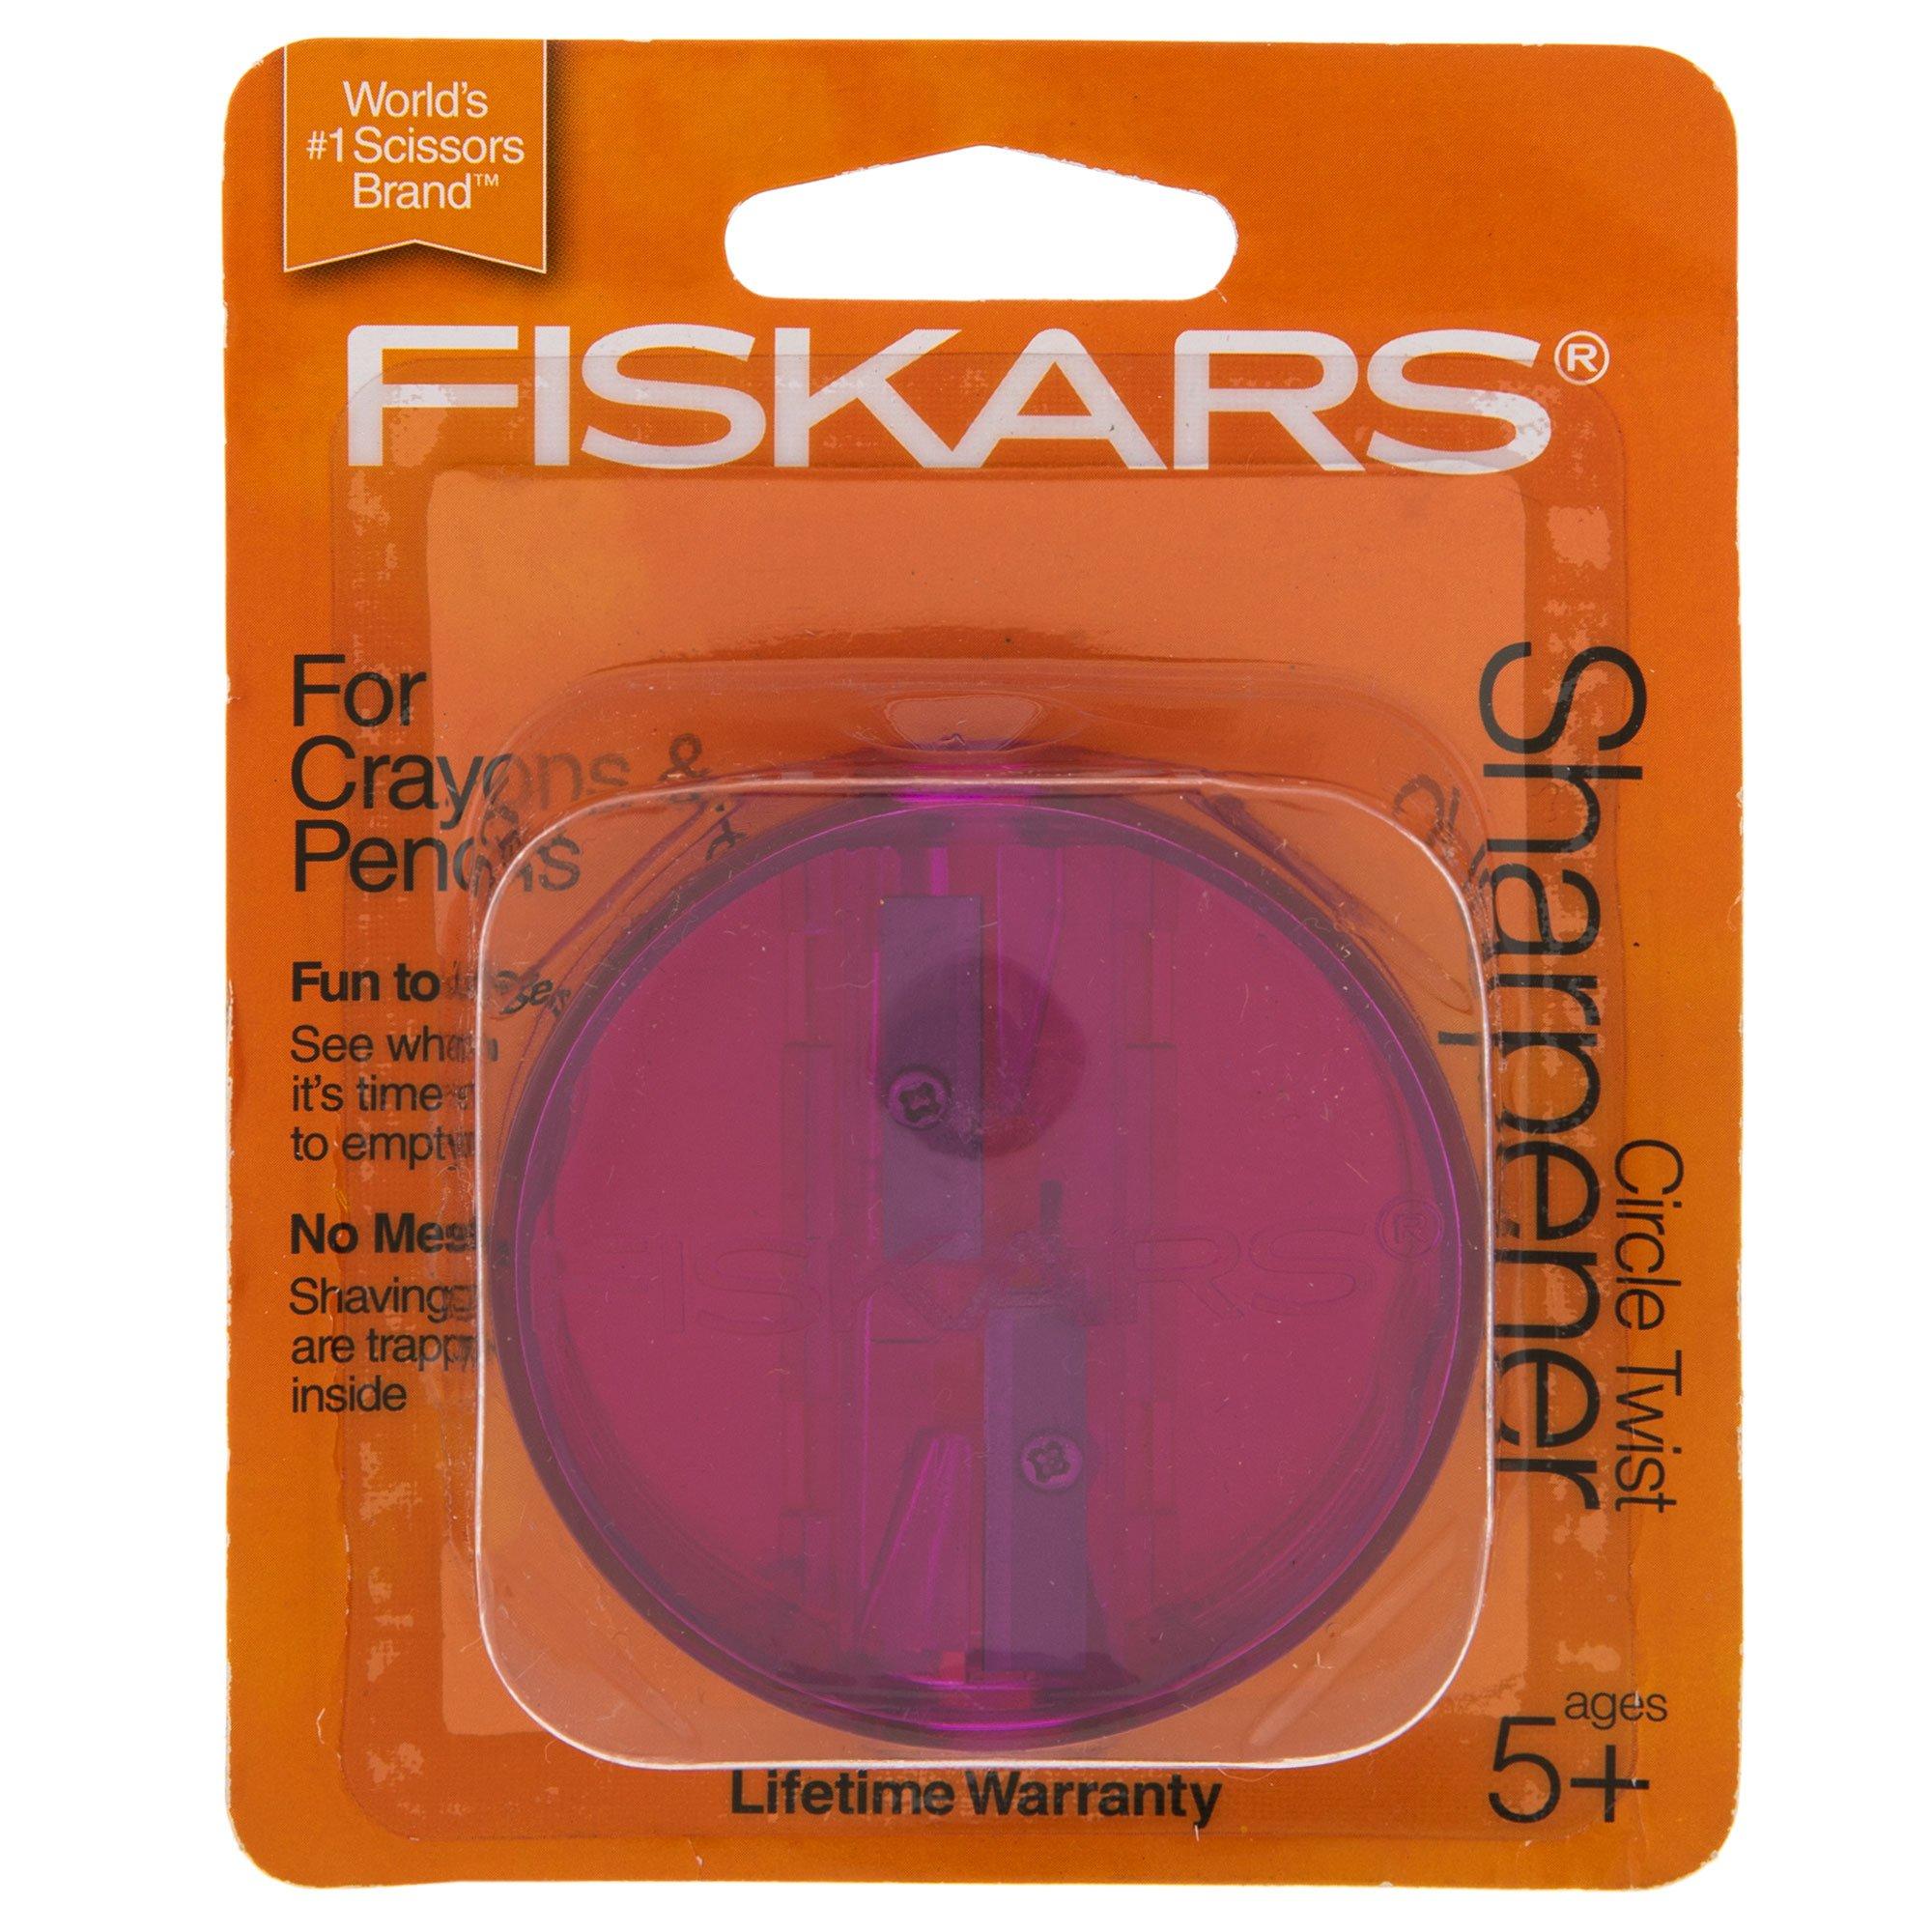 Fiskars Mess-Less Double Pencil Sharpener